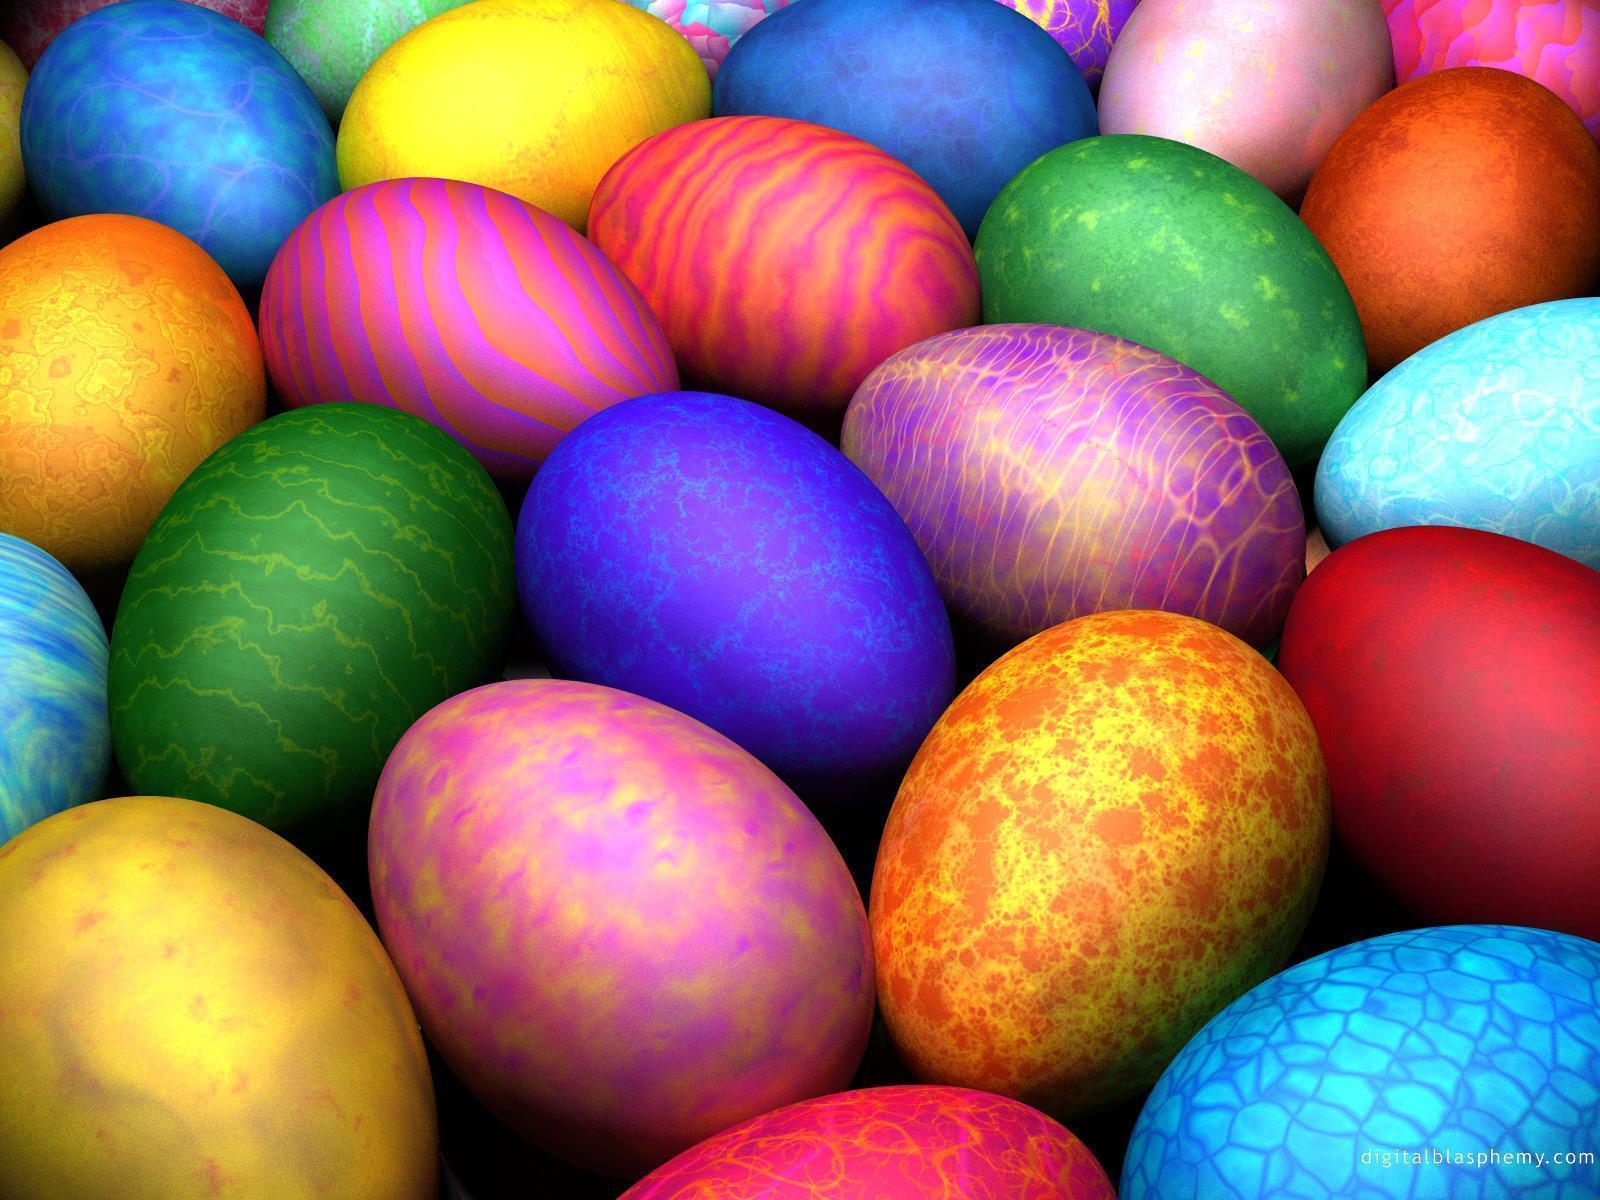 Colorful Easter eggs free desktop background wallpaper image